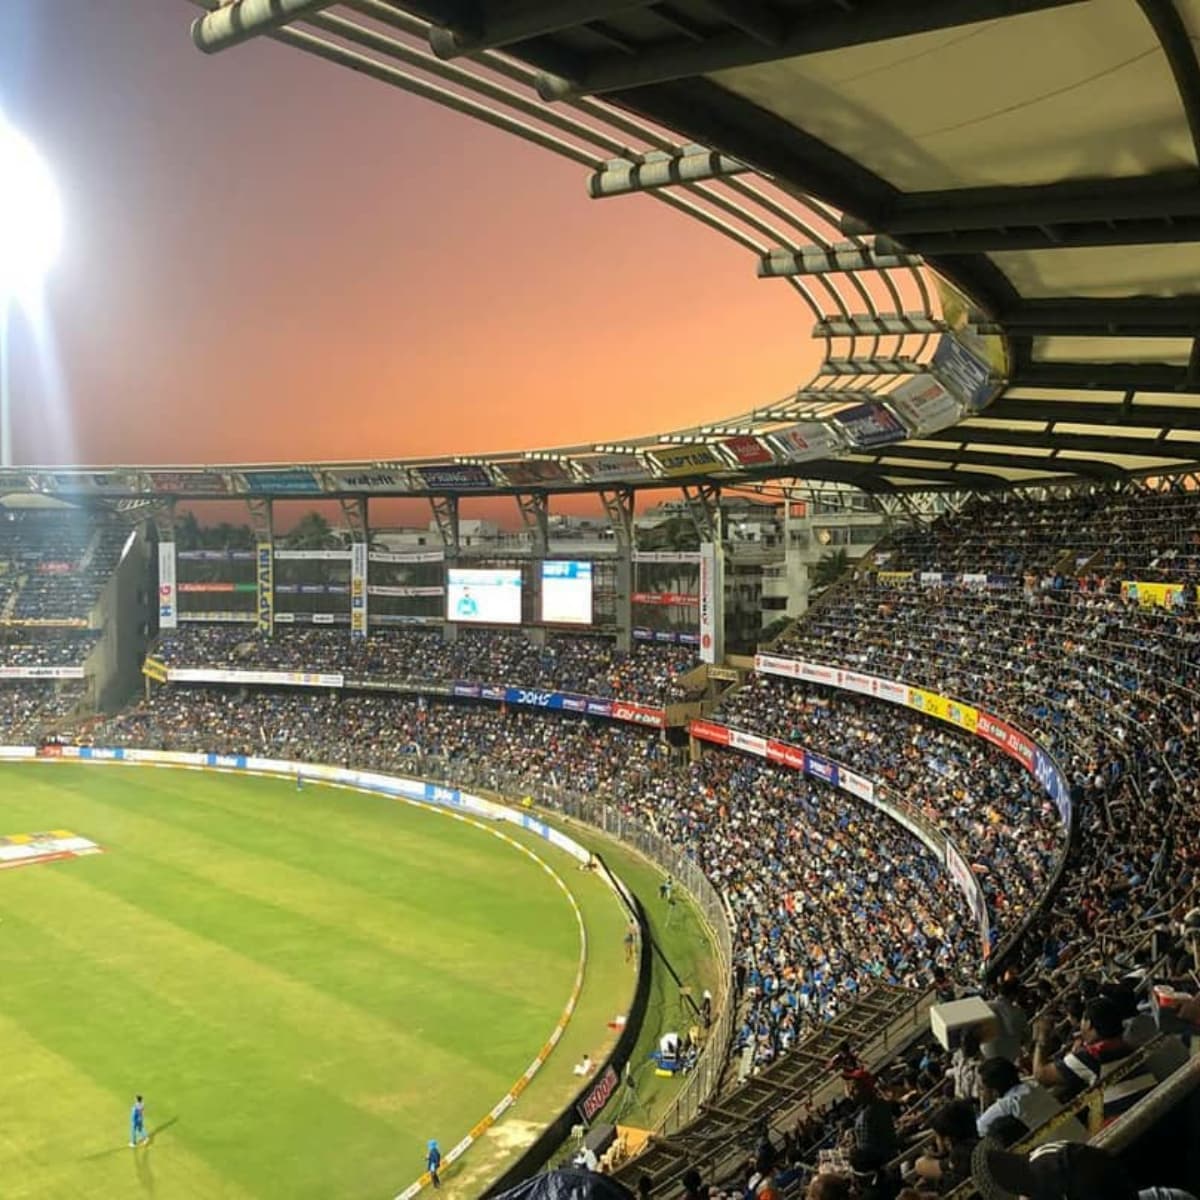 Mumbai's Wankhede Stadium to be used as quarantine center: BMC writes to MCA